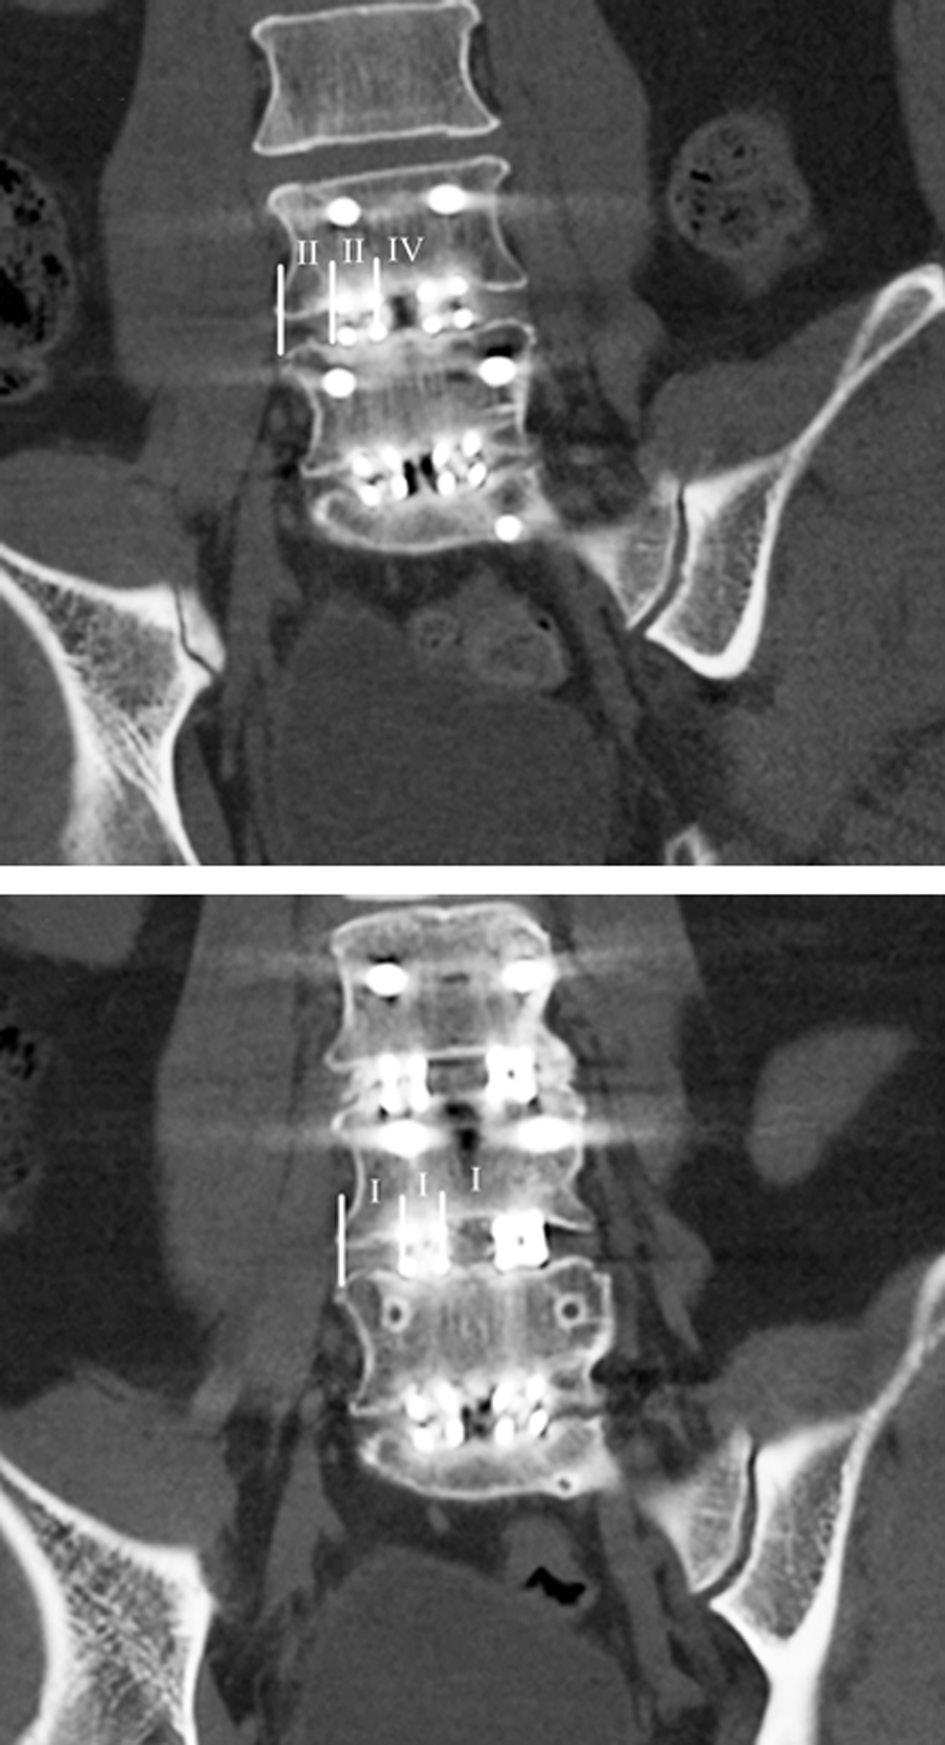 Journal of Korean Society of Spine Surgery Union Pattern of Grafted Bone During Posterior Lumbar Interbody Fusion 이부진한예는이때문인것으로생각된다. CT 상 B 구역에서국소골을충분히다져넣은례로국한하여분석한다면유합률은지금보다높을것으로추정된다.